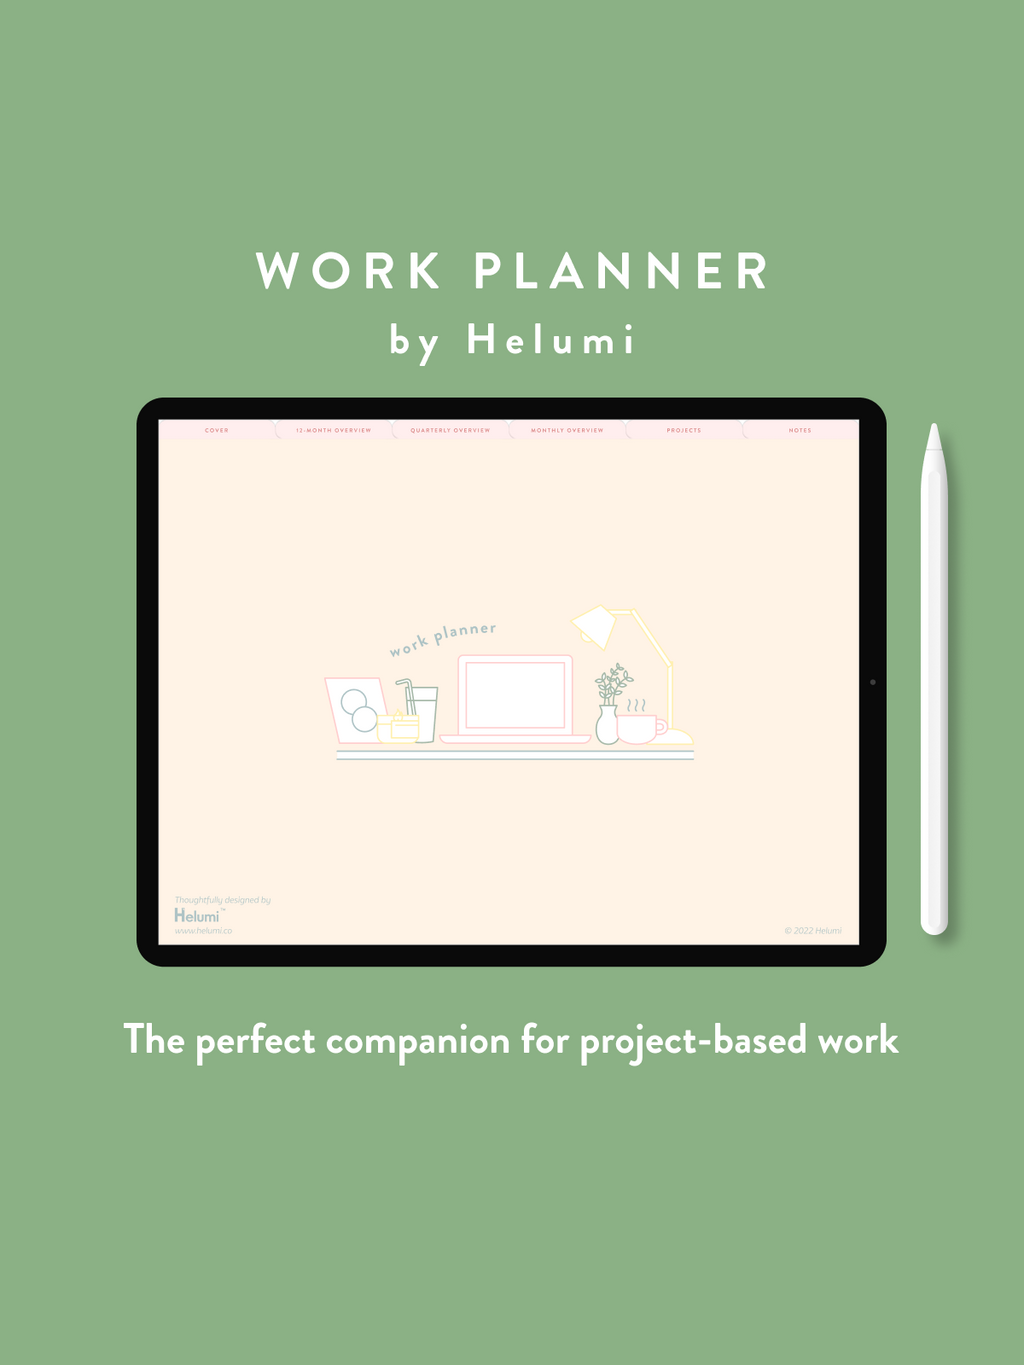 Digital work planner